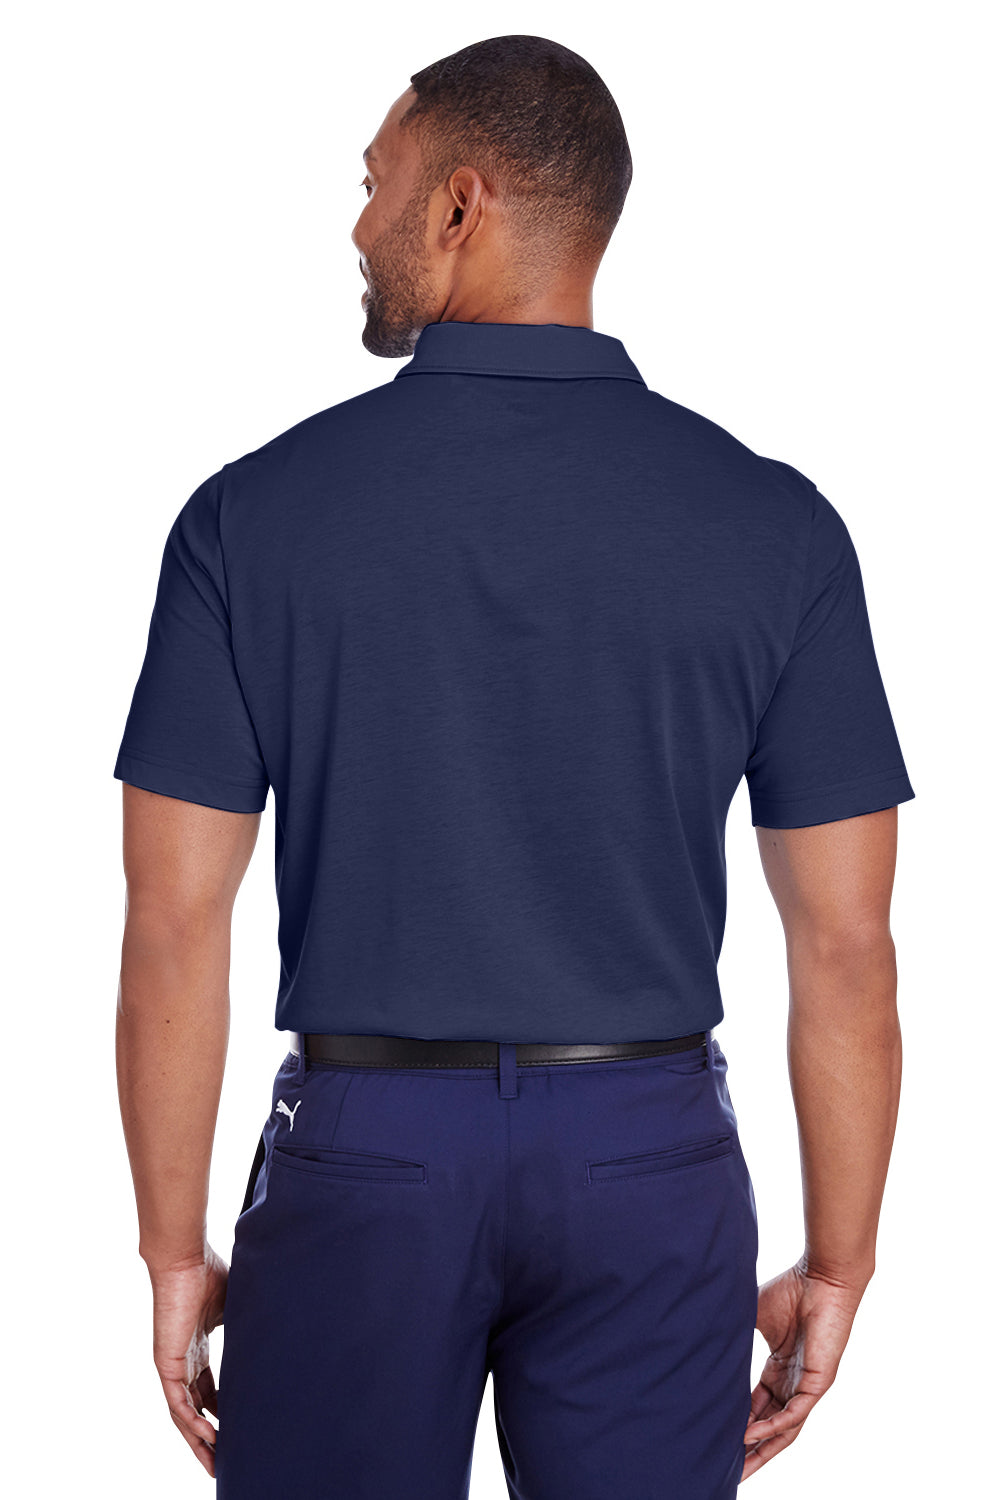 Puma 596920 Mens Fusion Performance Moisture Wicking Short Sleeve Polo Shirt Navy Blue Back